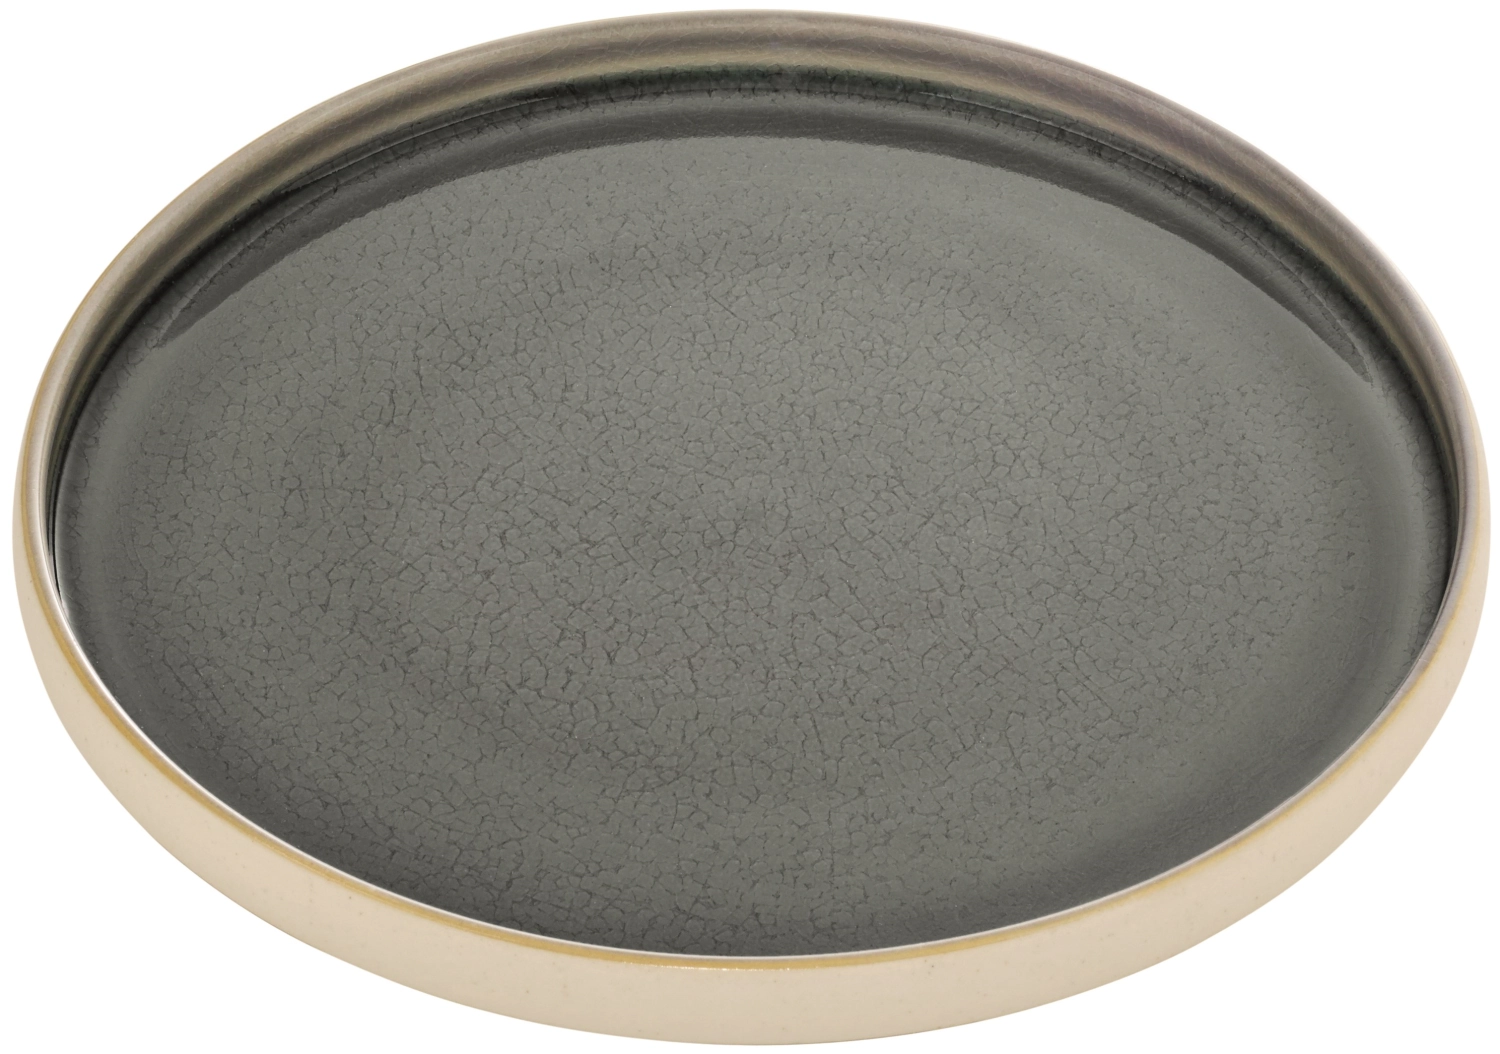 Nara plate flat round grey 21cm